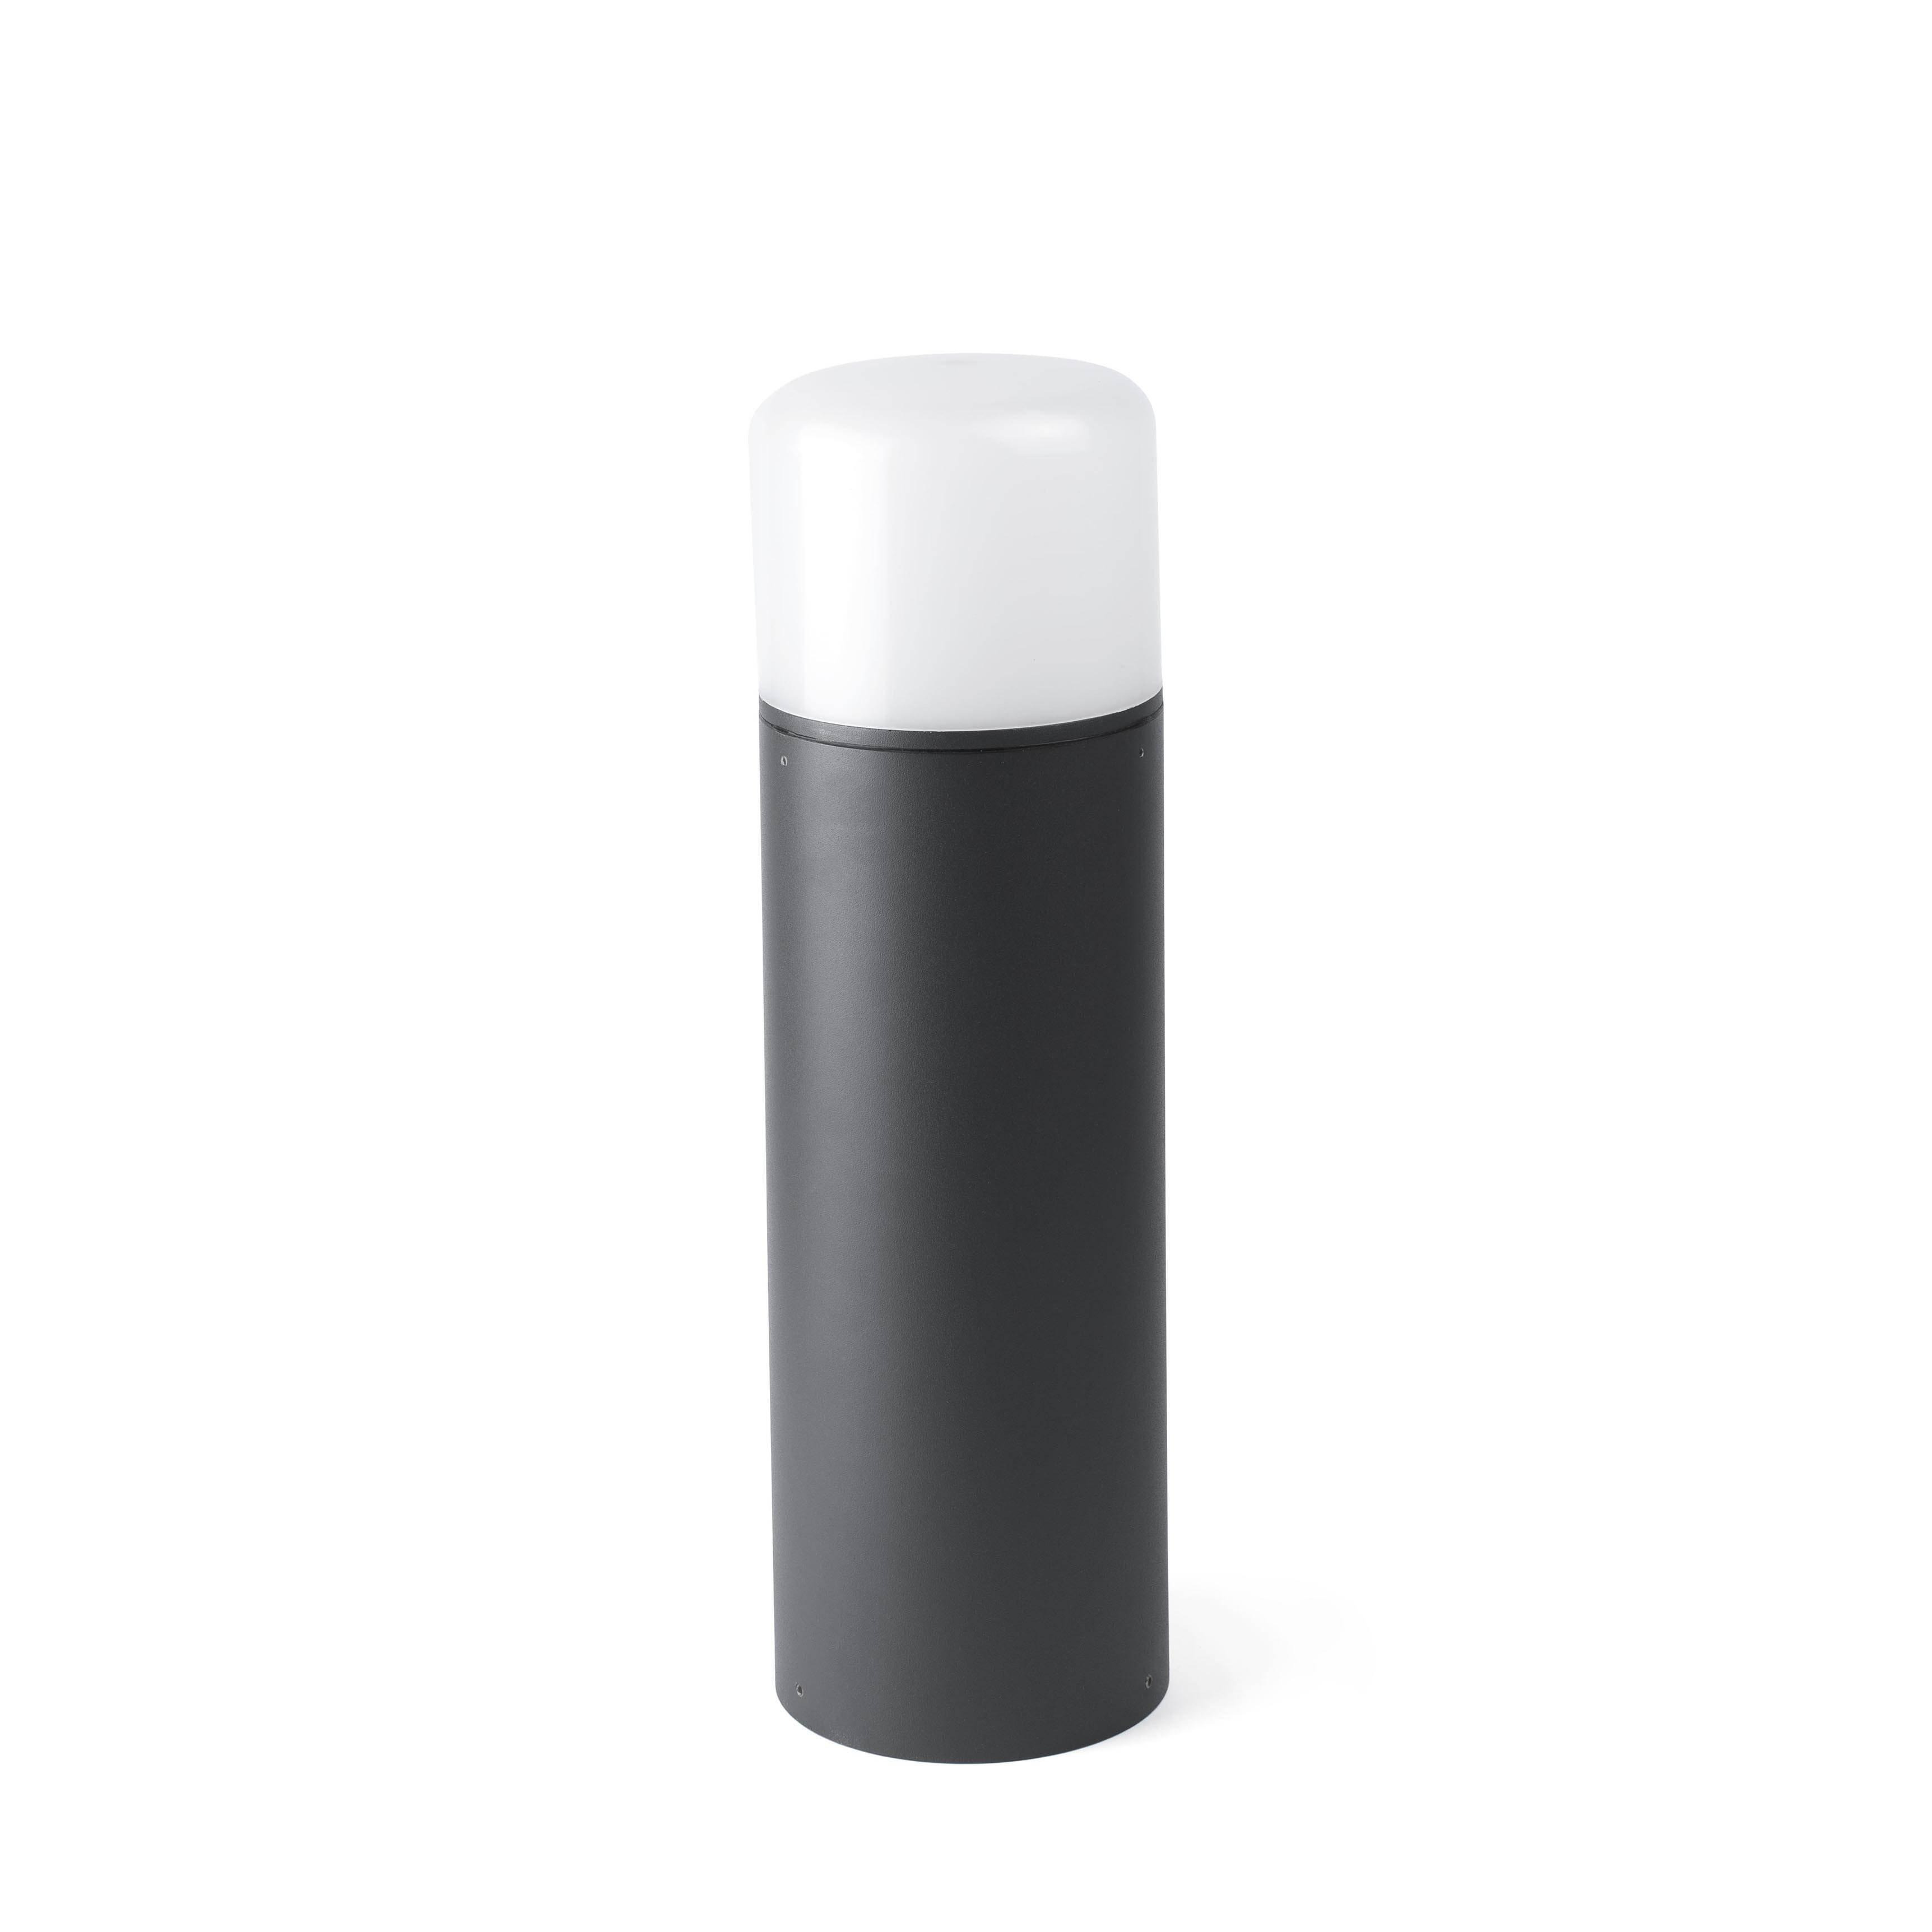 Muga LED Outdoor Bollard Light White Dark Grey IP65 - image 1